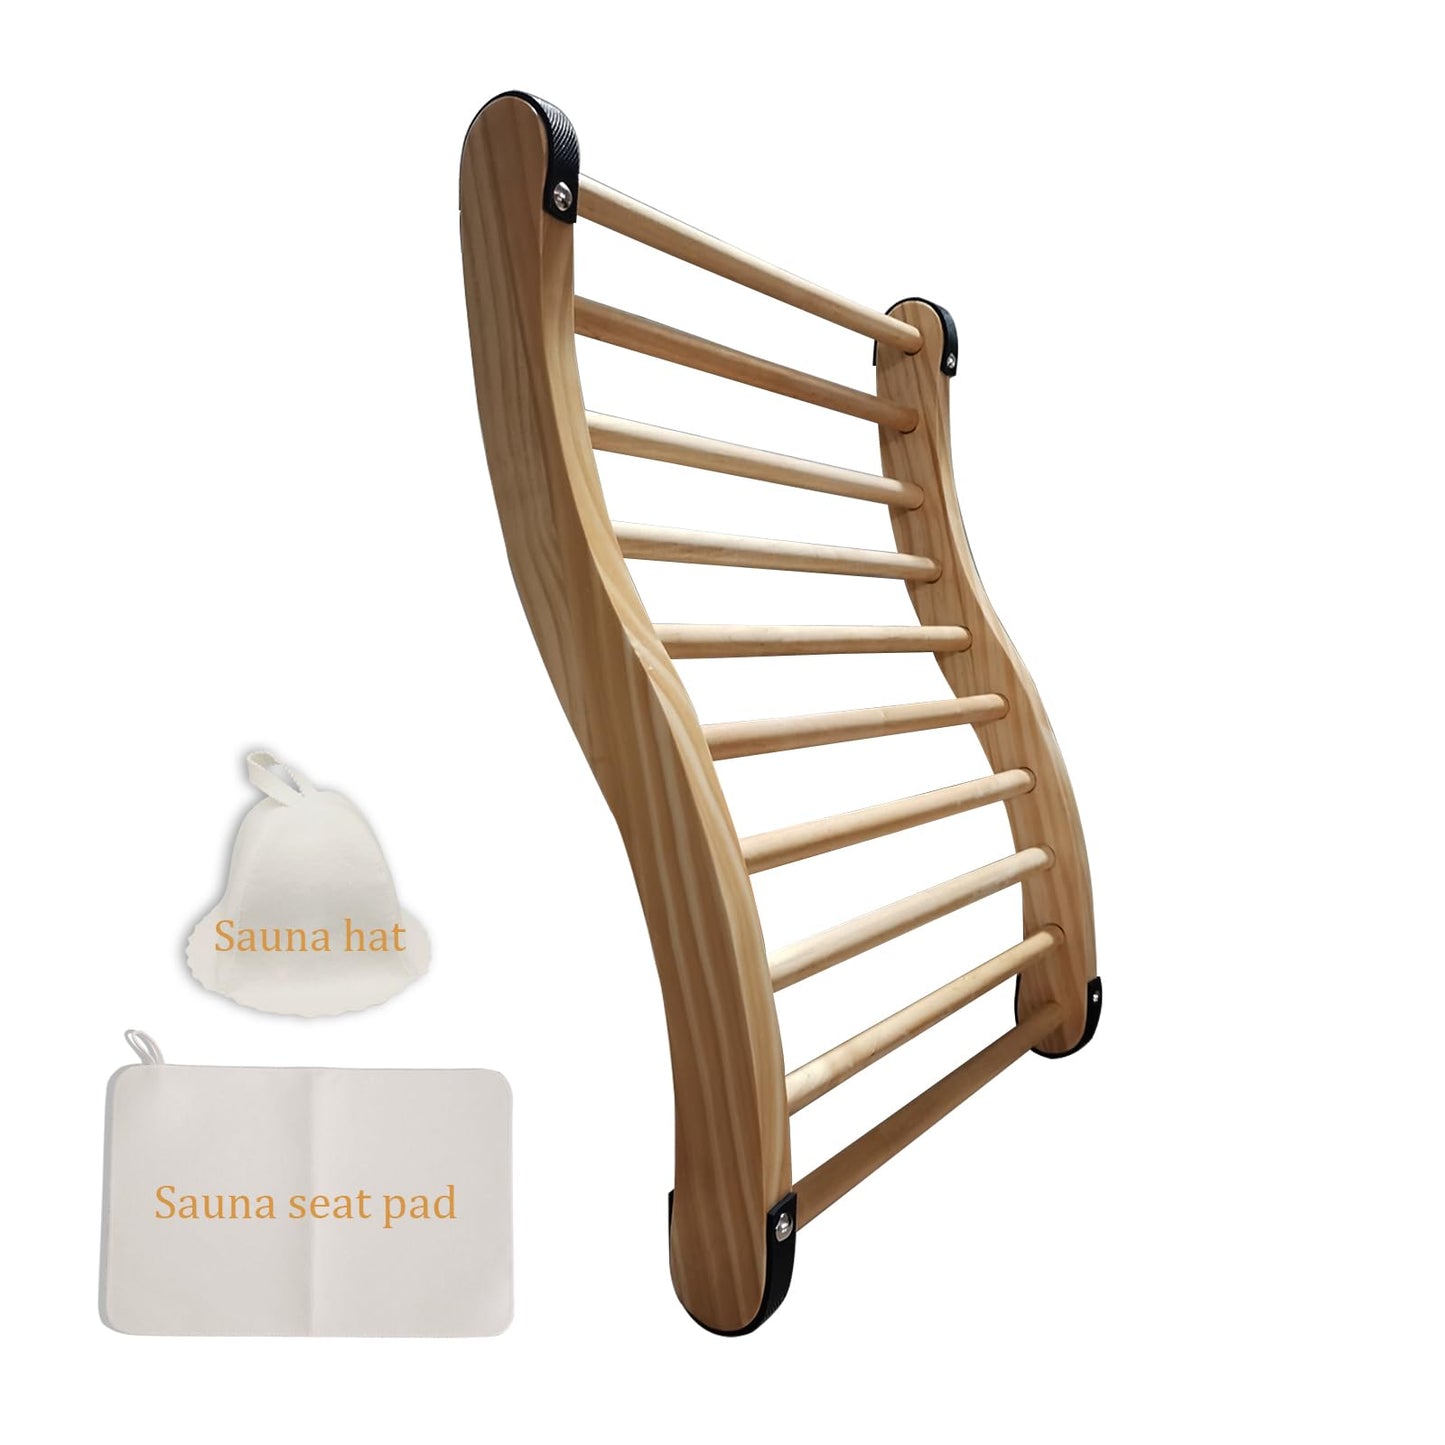 BESTNEWIE Red Cedar Sauna Backrest for Barrel or Infrared Sauna Slip-Resistant, Non-Toxic, Comfortable S-Shape Design - Cedar Sauna Accessories with Felt Sauna Hat and Seat Pad (1 Pack)